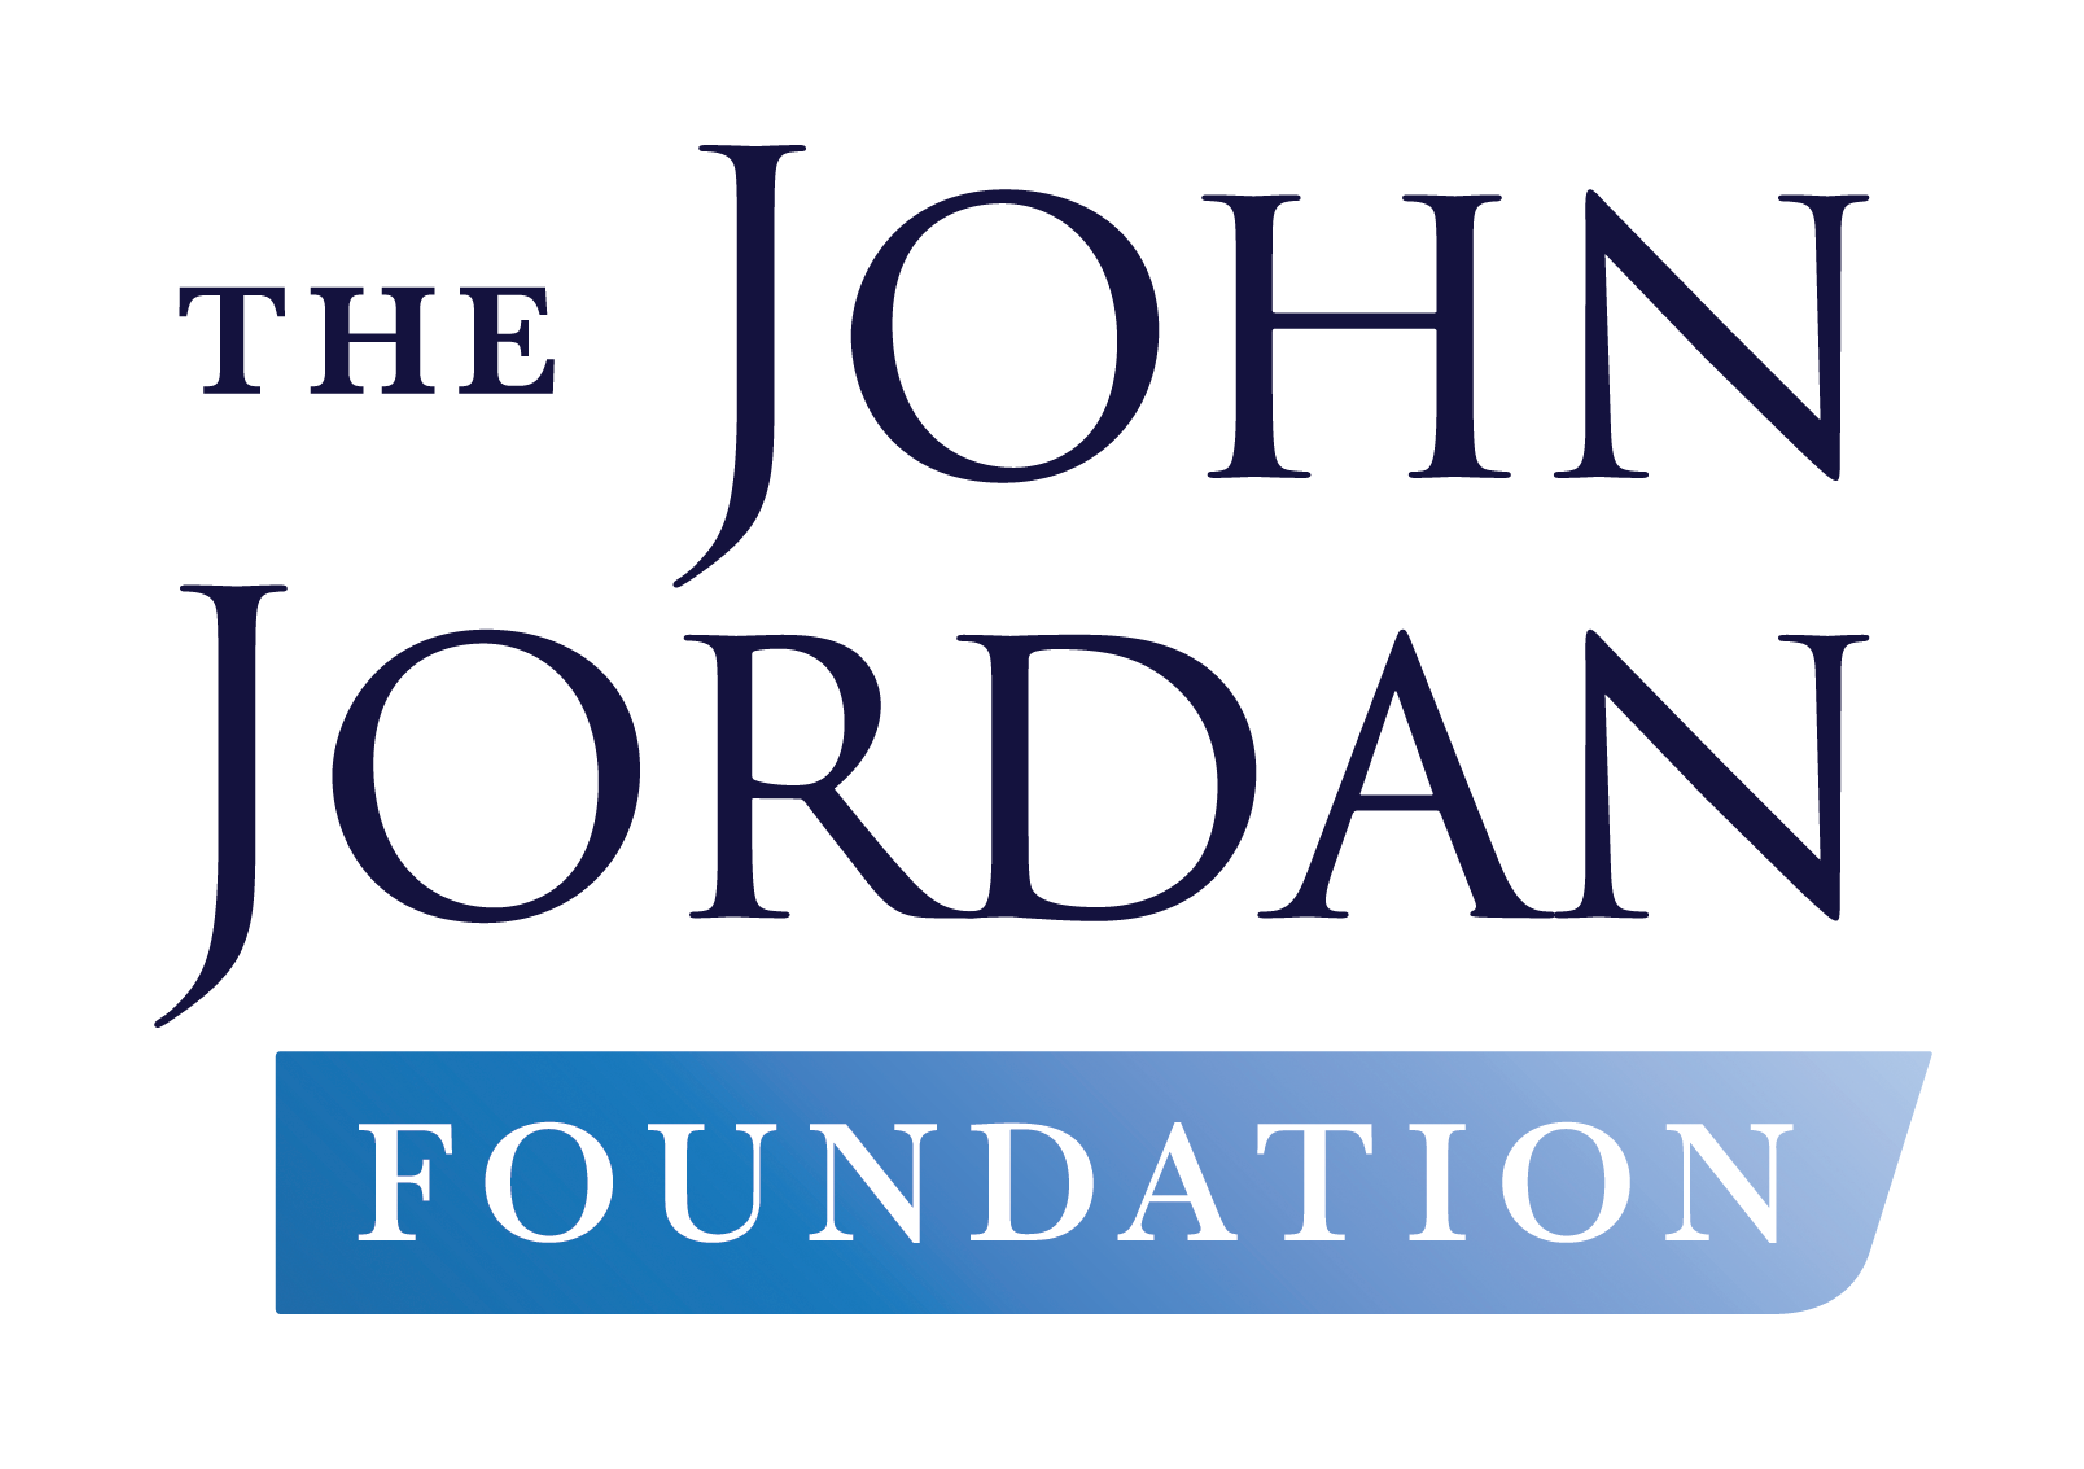 The John Jordan Foundation